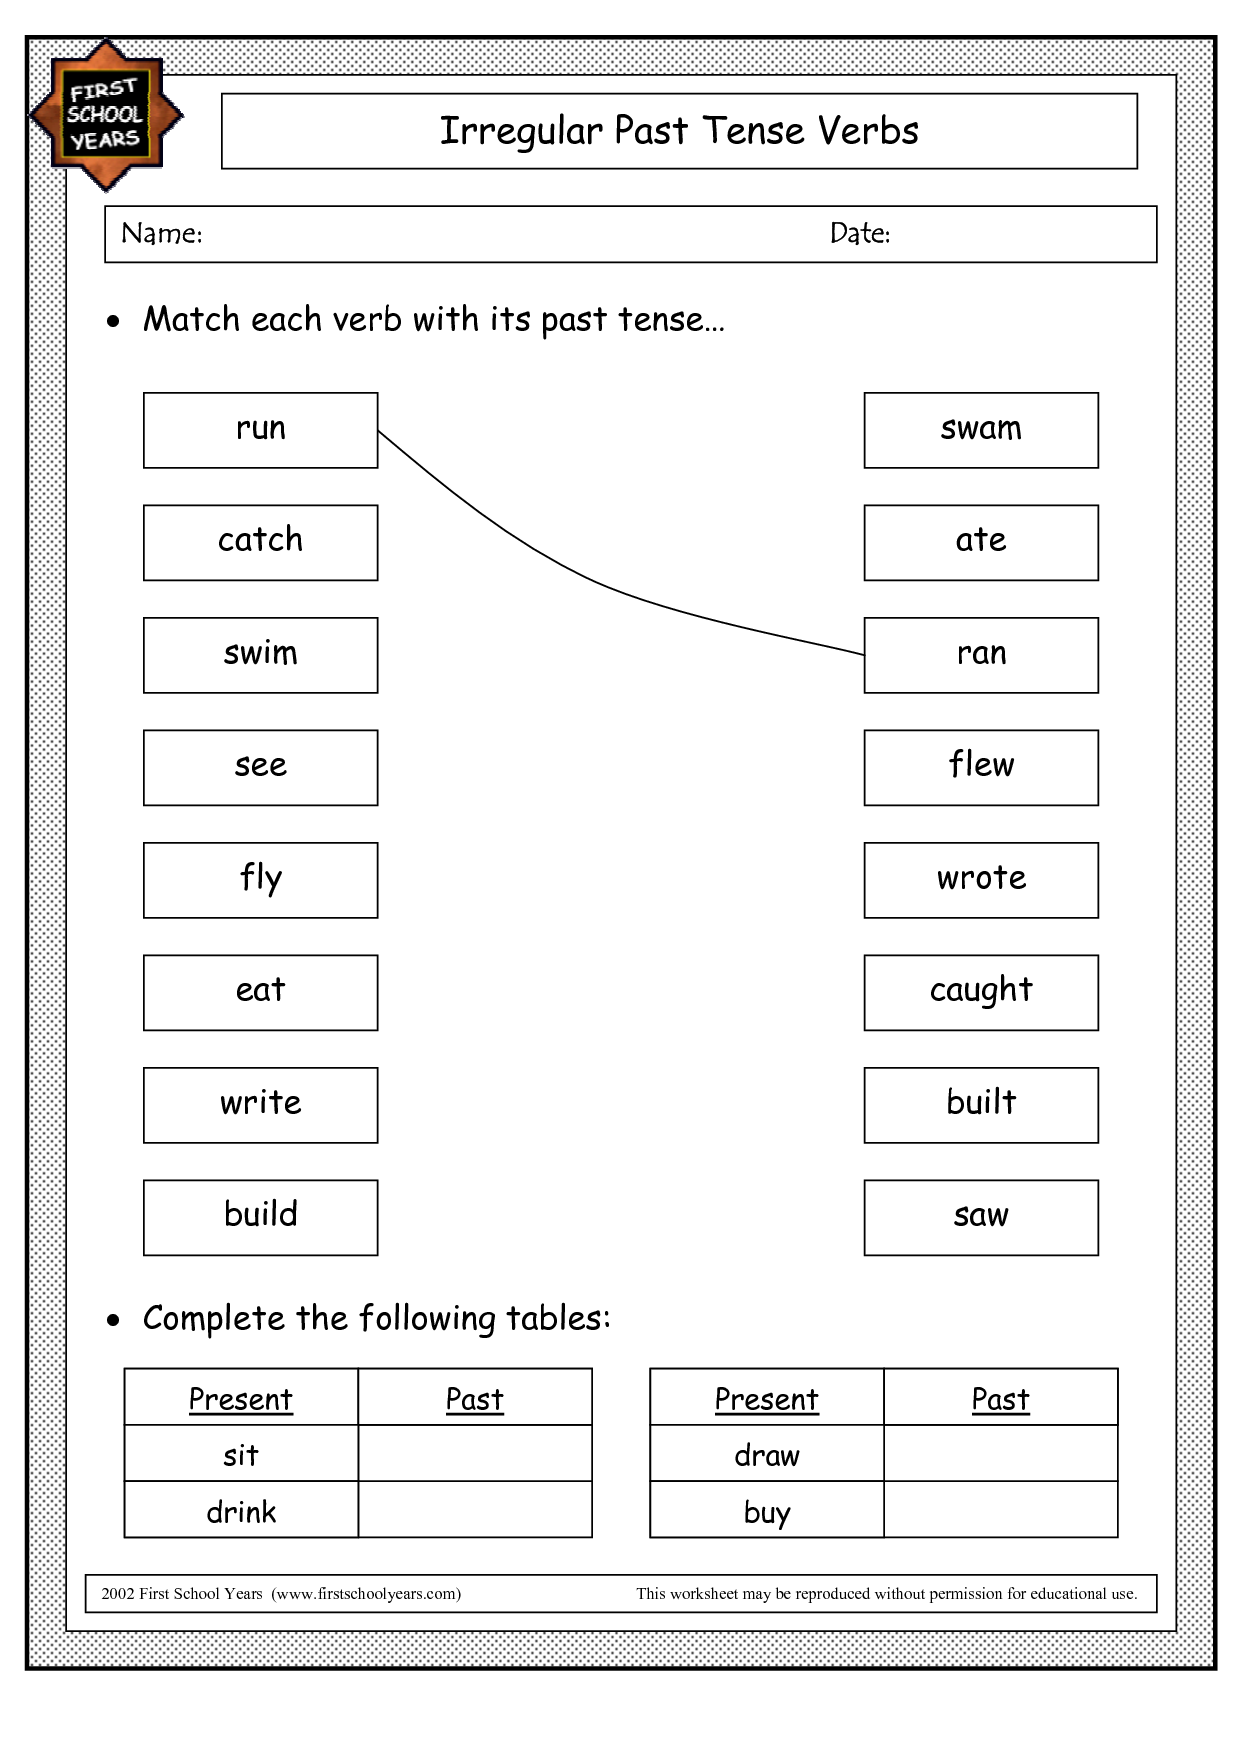 16-best-images-of-verb-tense-exercises-worksheet-irregular-past-tense-verb-worksheet-present